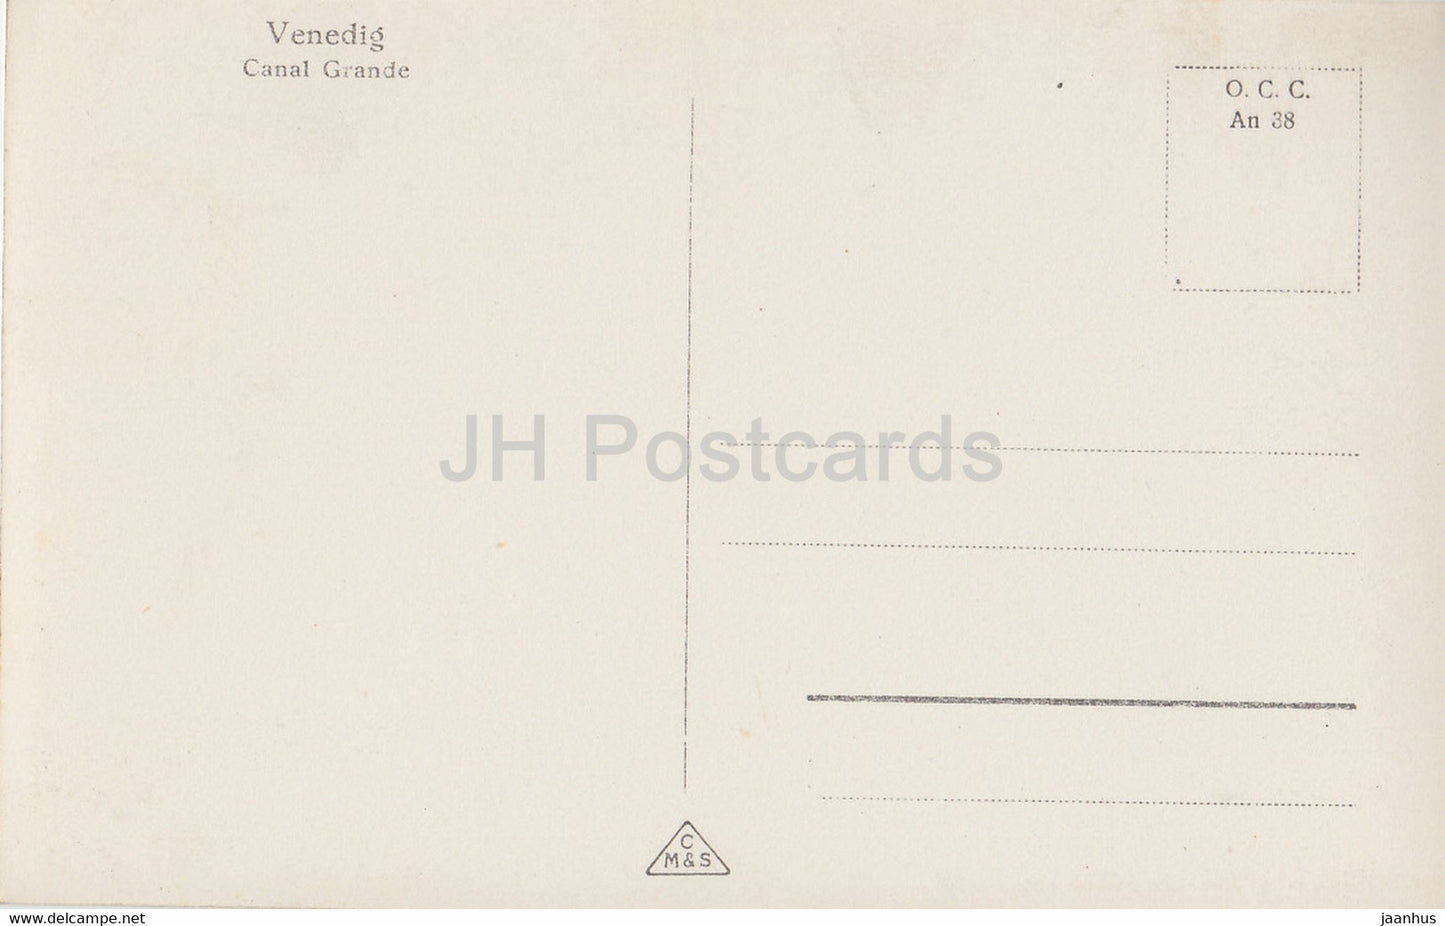 Venezia - Vendig - Venice - Canal Grande - 644 - old postcard - Italy - unused